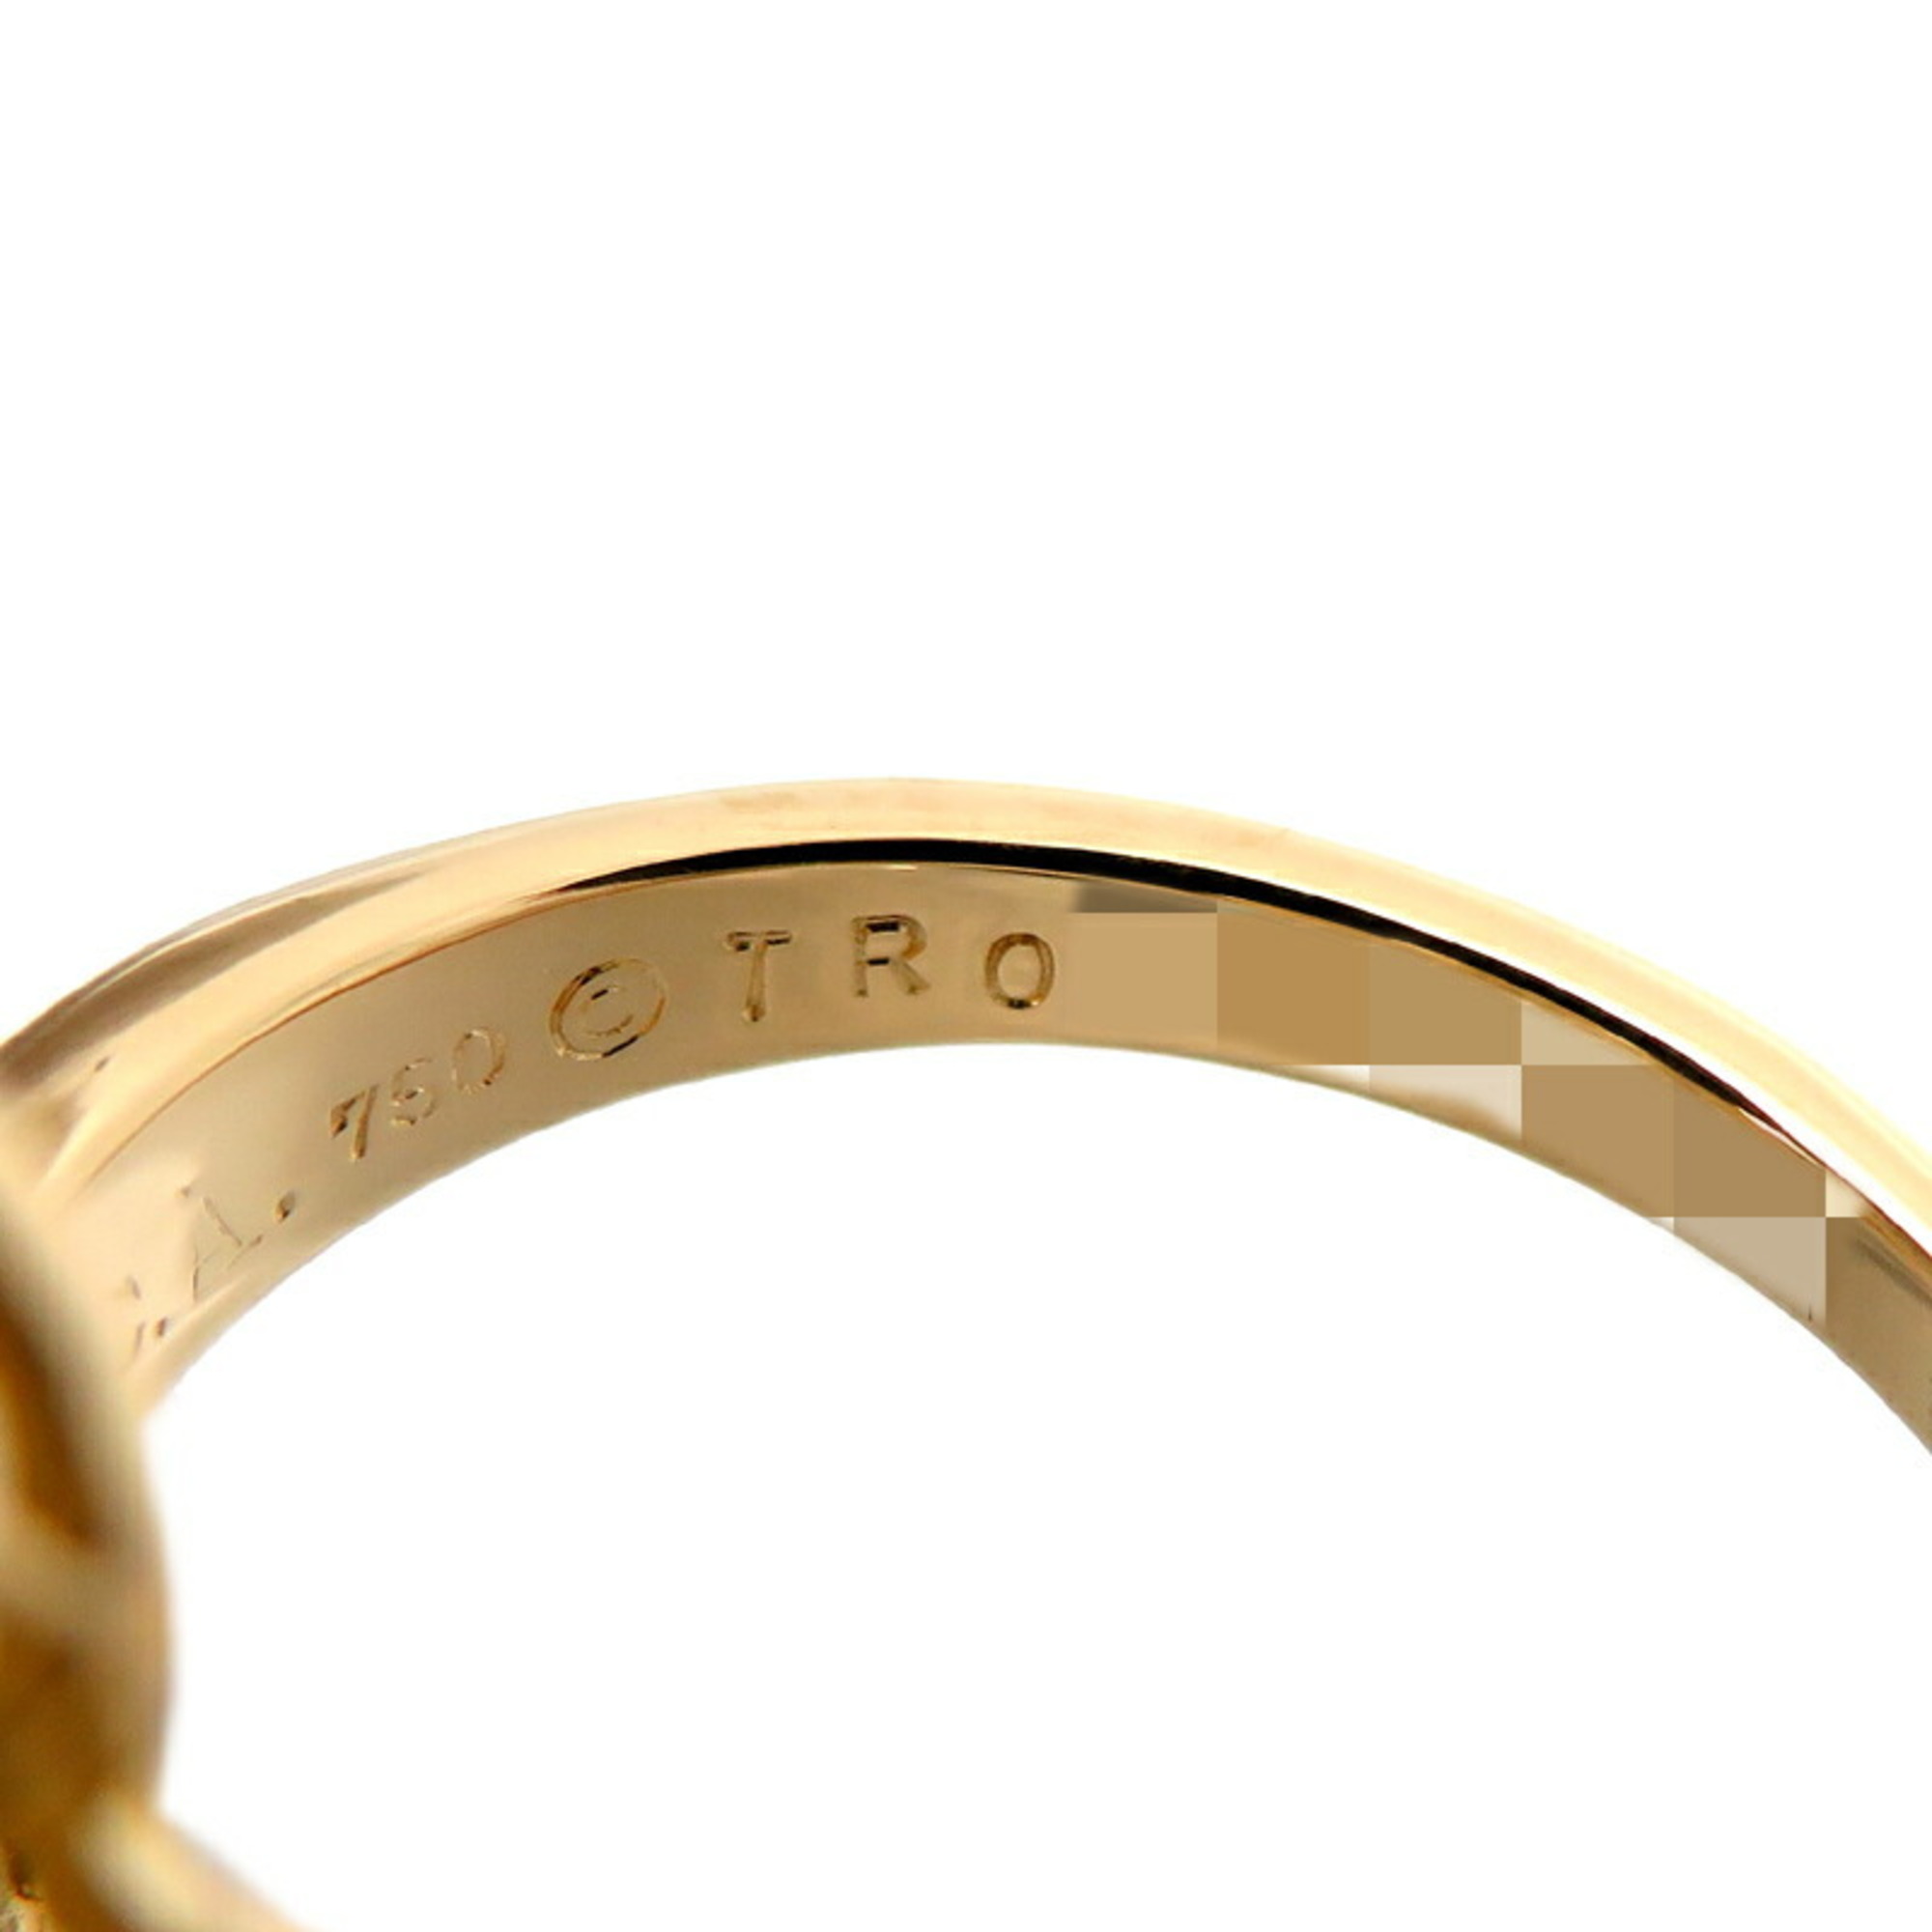 Van Cleef & Arpels Trefle Diamond Women's Ring, 750 Yellow Gold, Size 9